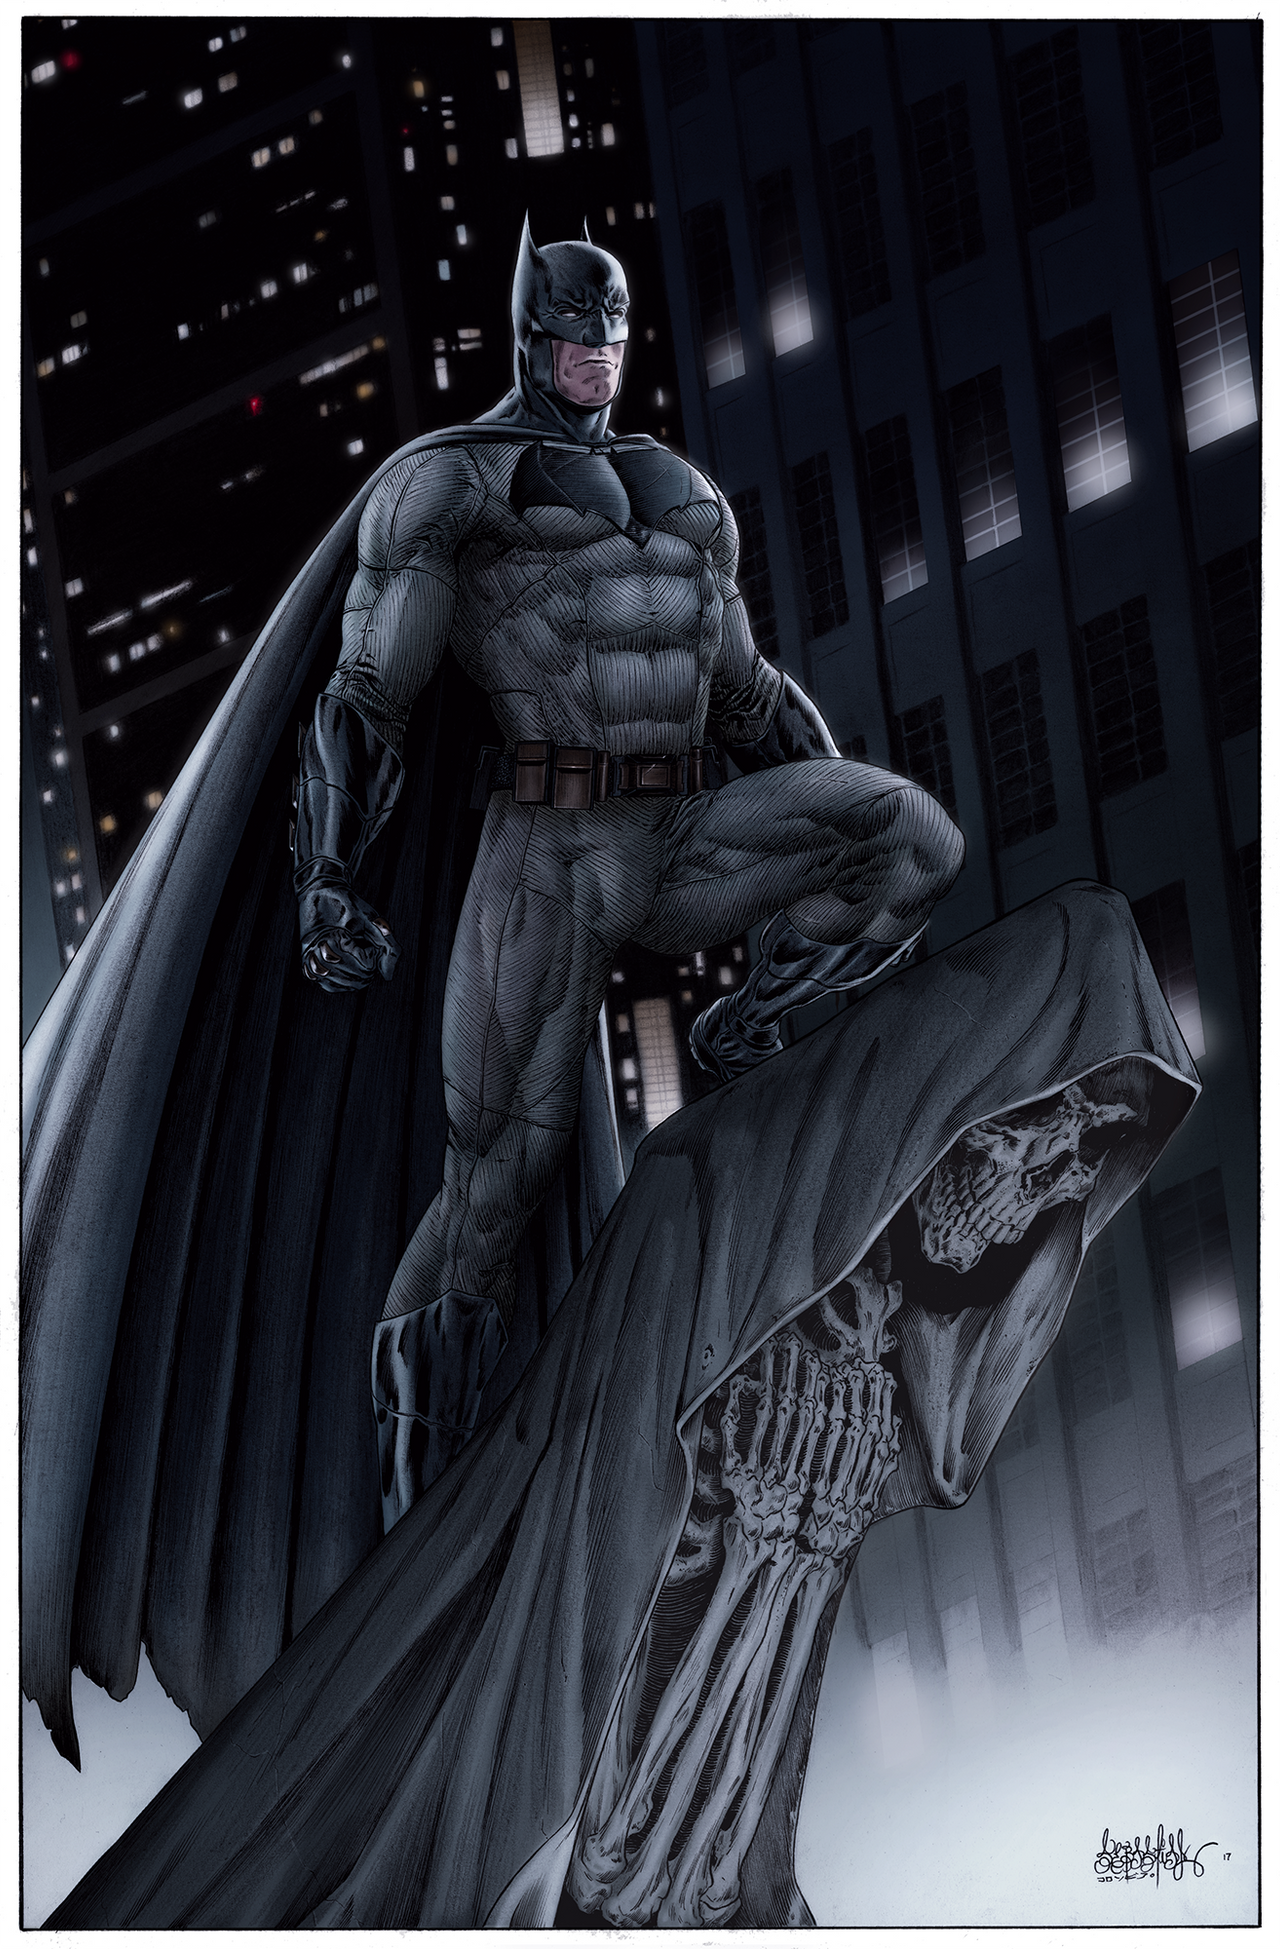 Batman on Gargoyle BVS color by garnabiuth on DeviantArt